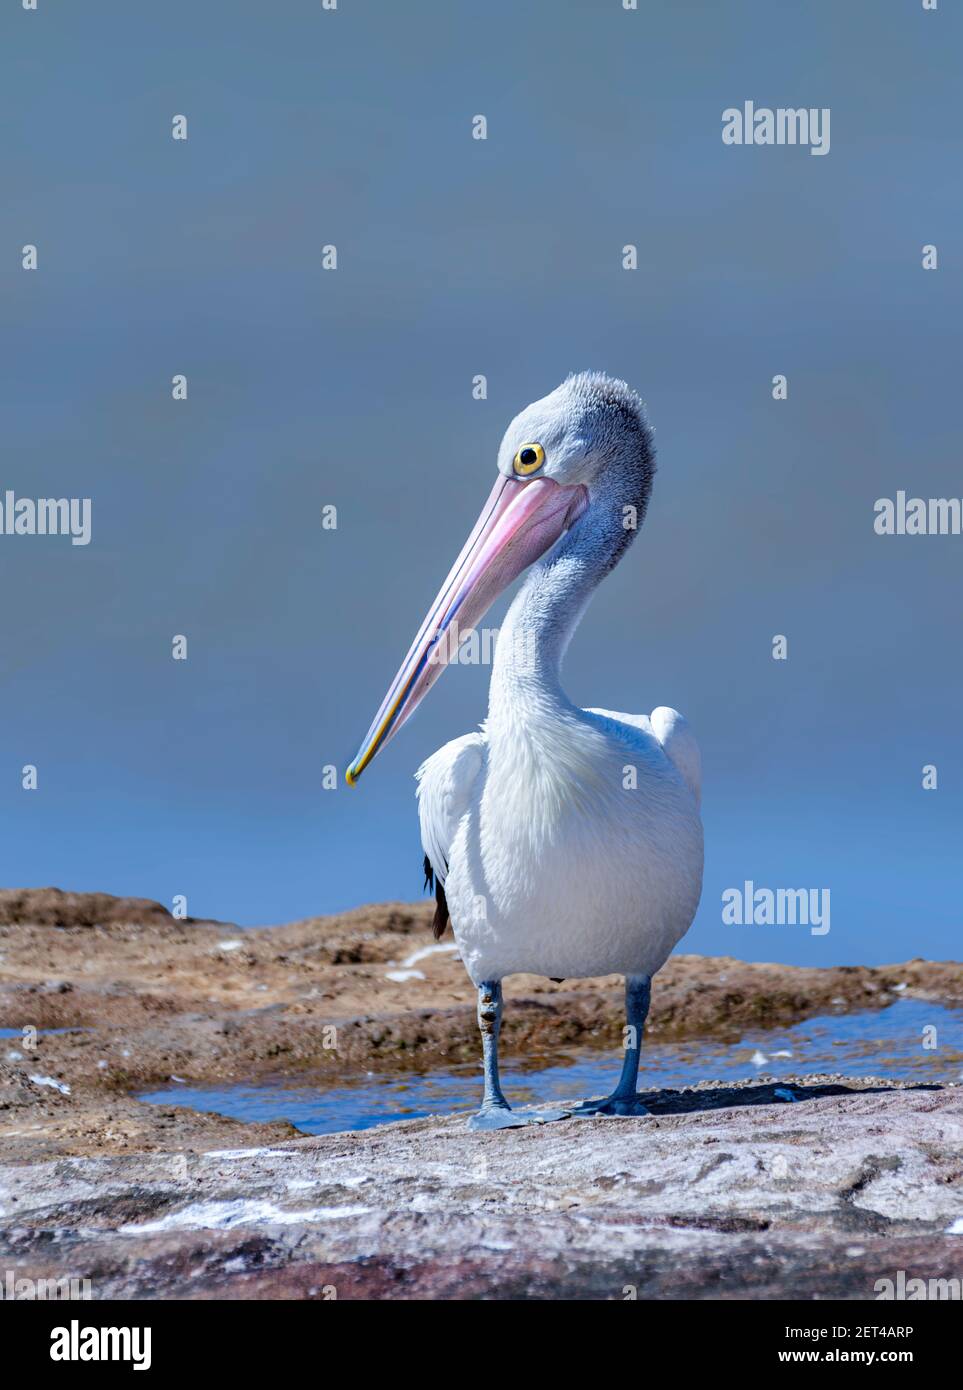 The Australian pelican standing at the edge of a lake, Australia Stock Photo